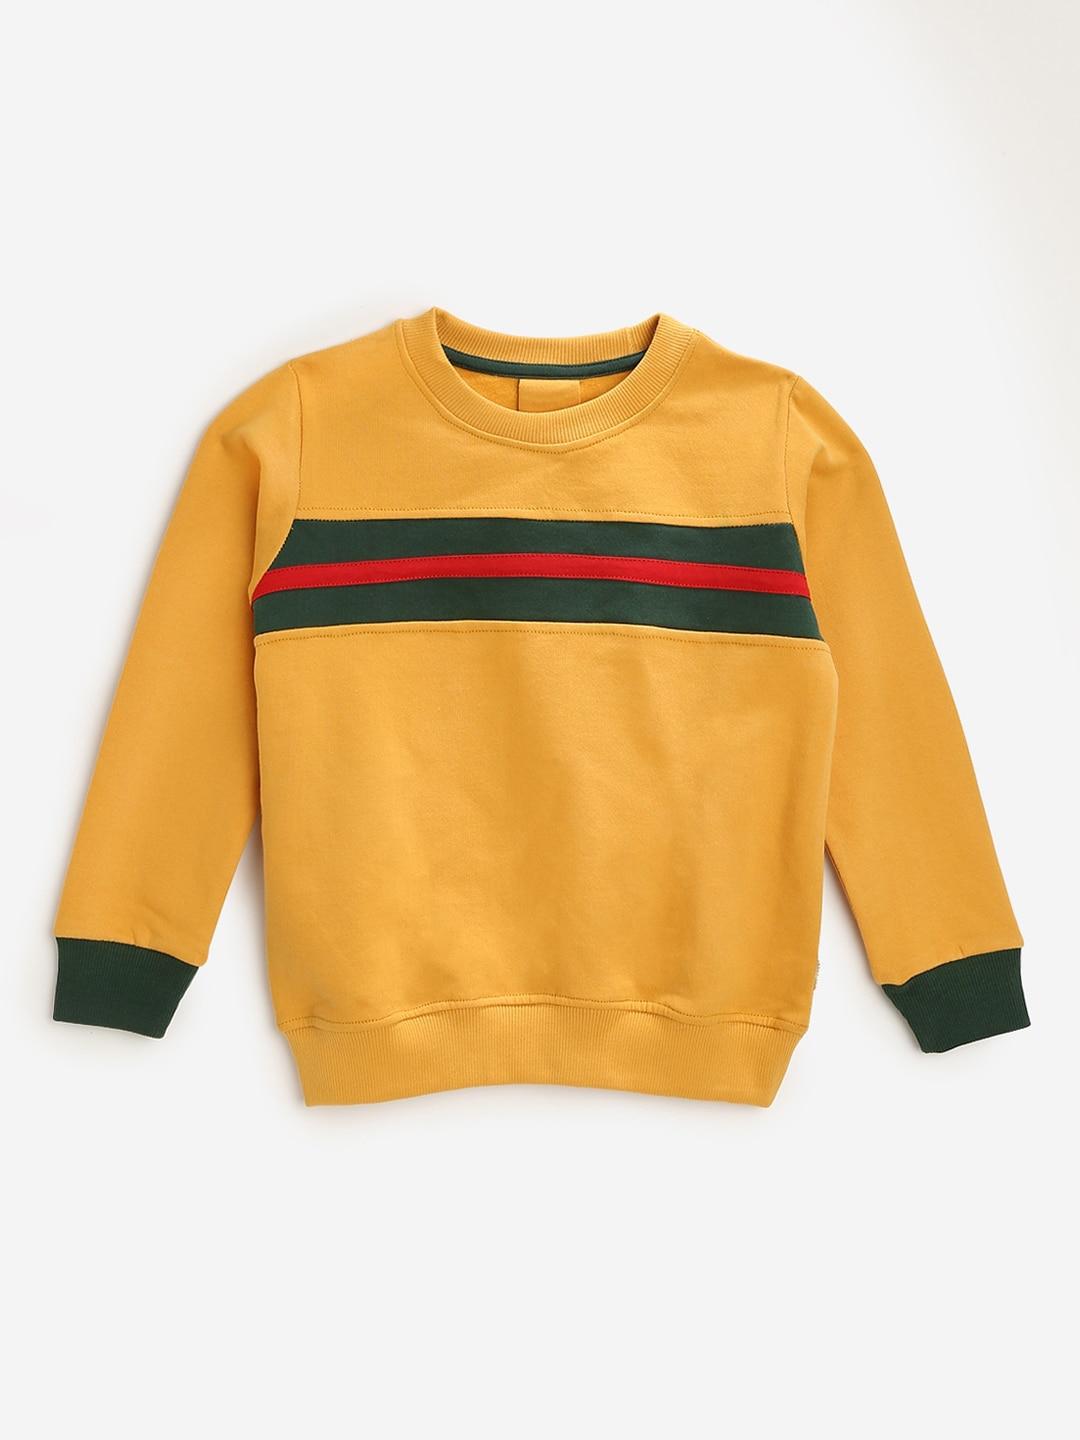 kidscraft-boys-yellow-striped-sweatshirt